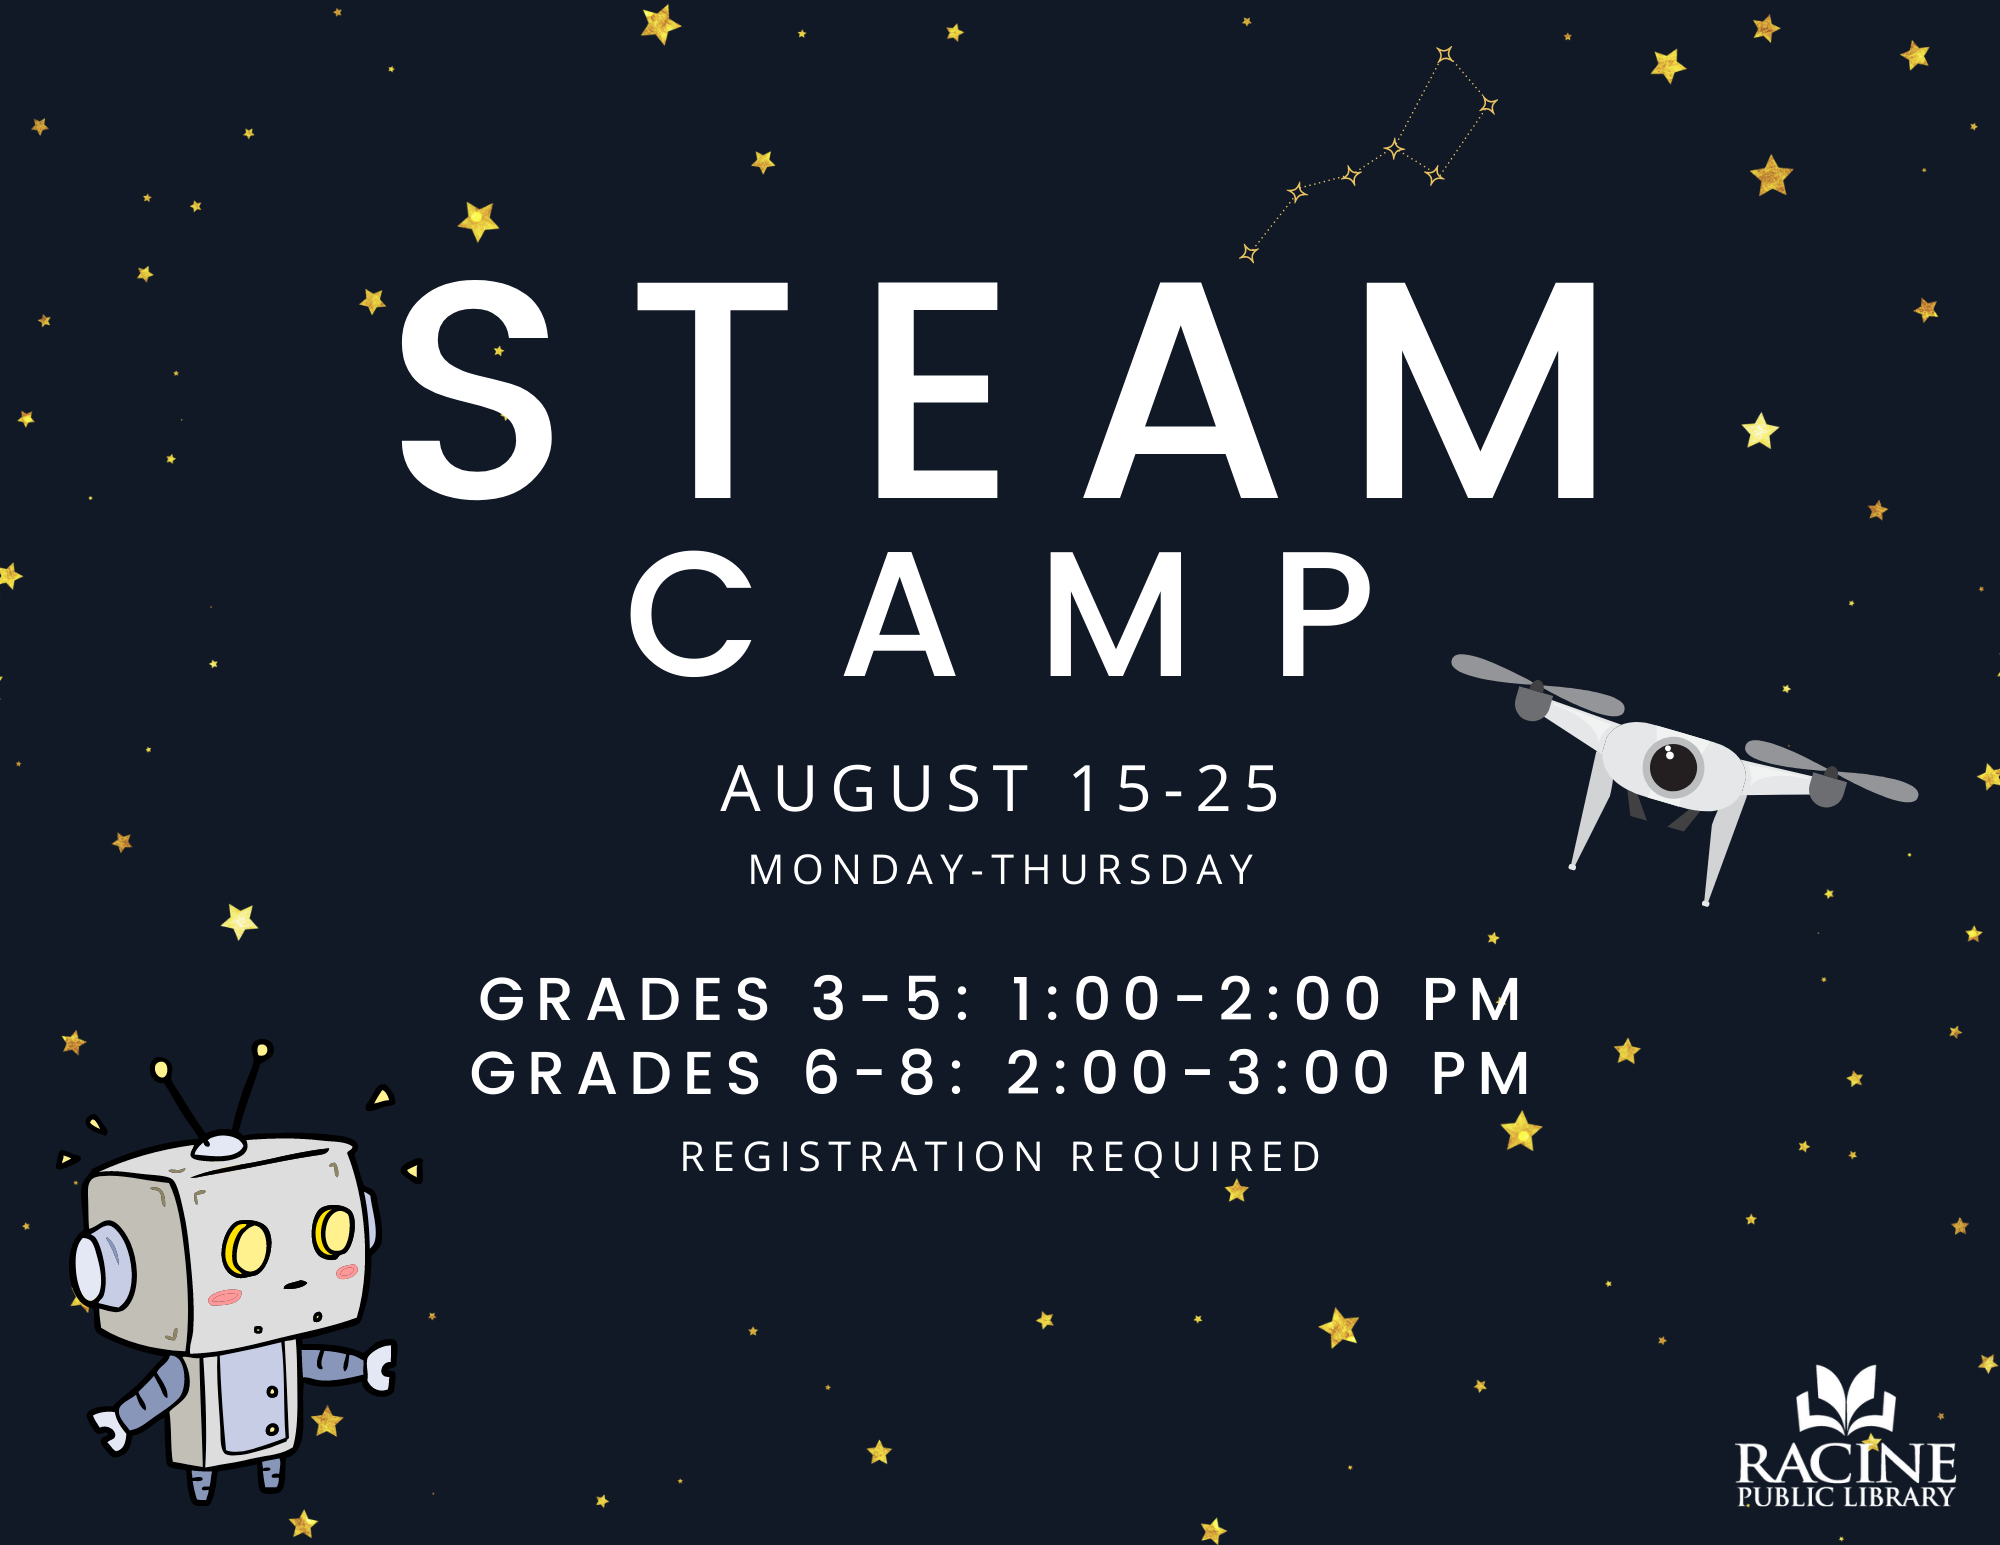 STEAM Camp: August 15-25, Monday-Thursday. Grades 3-5: 1-2 p.m. Grades 6-8: 2-3 p.m. Registration required.